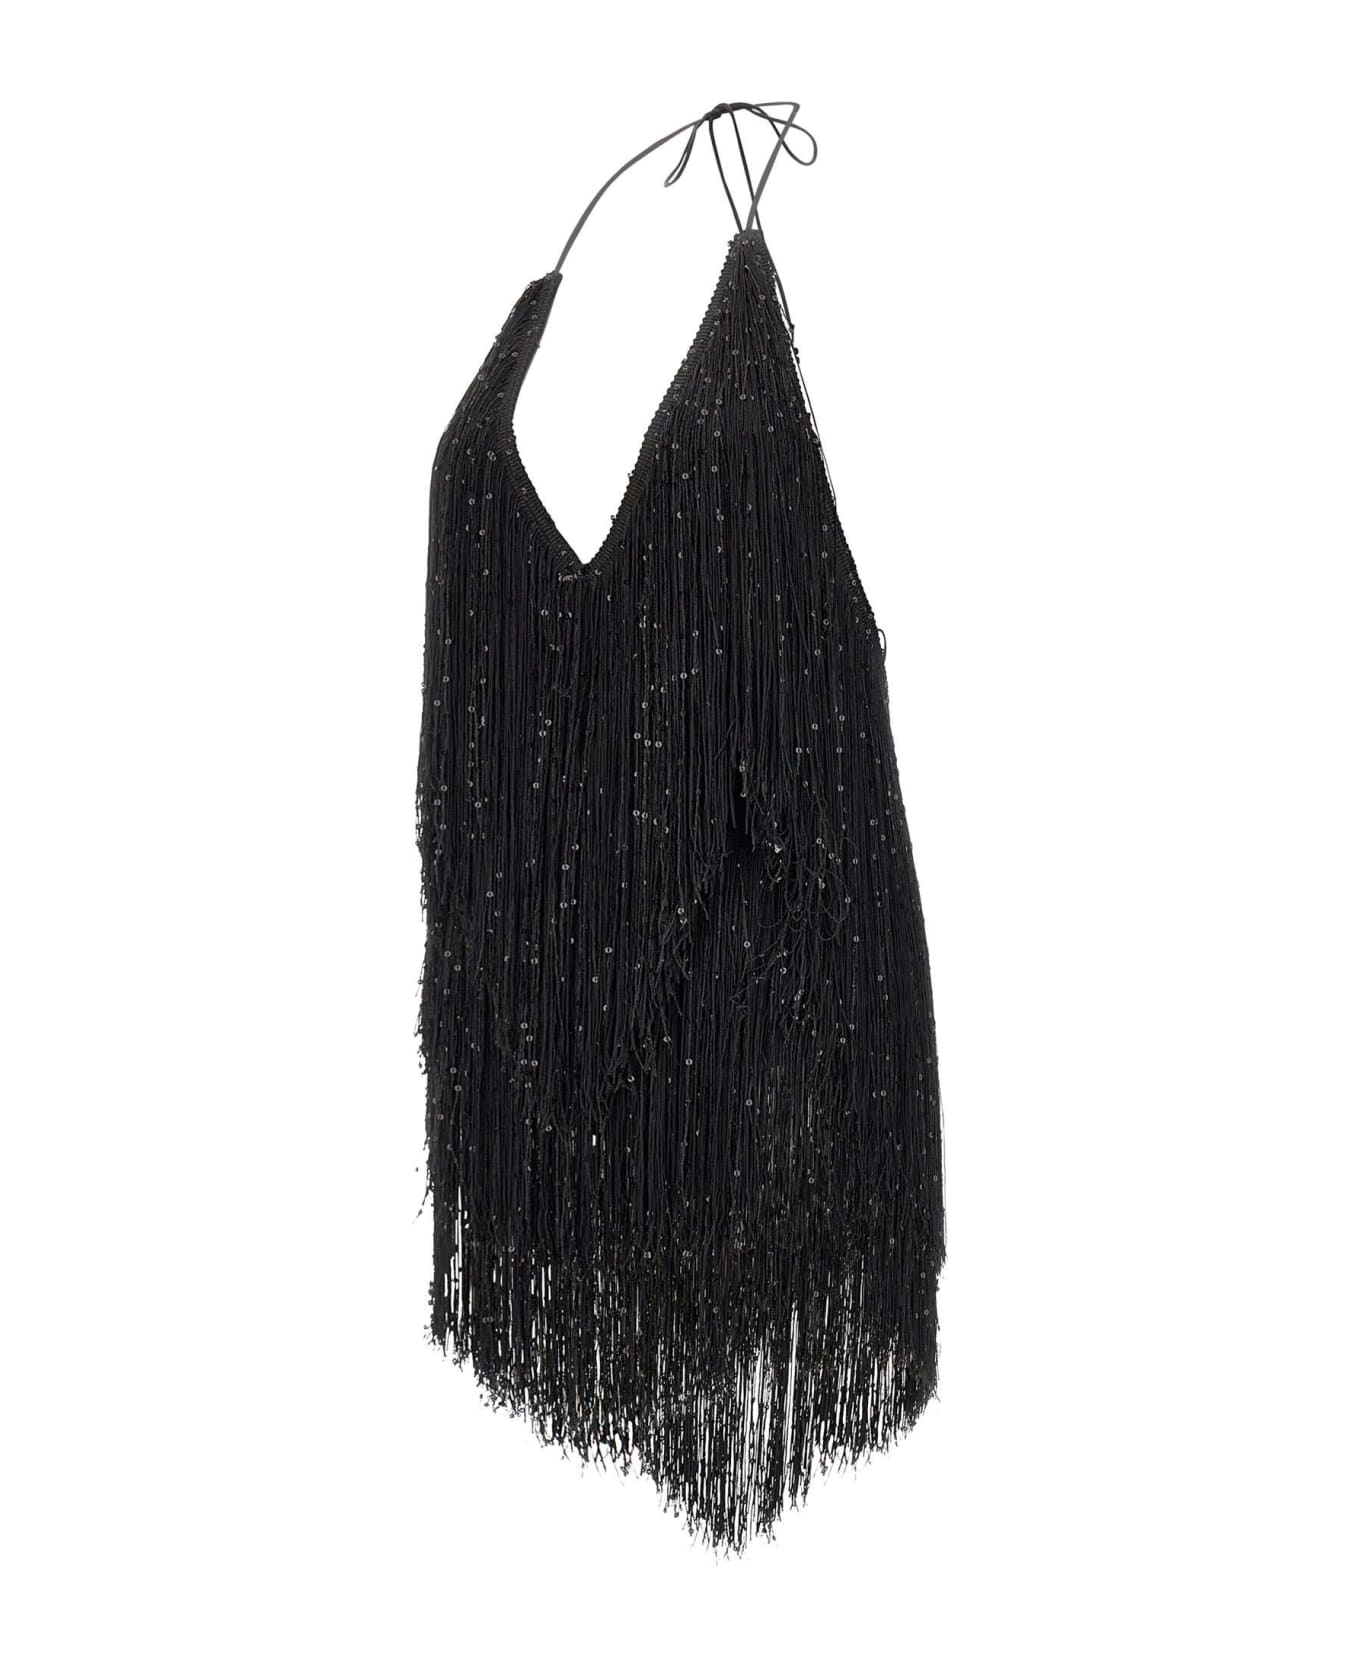 Rotate by Birger Christensen "sequin Fringe" Dress - BLACK